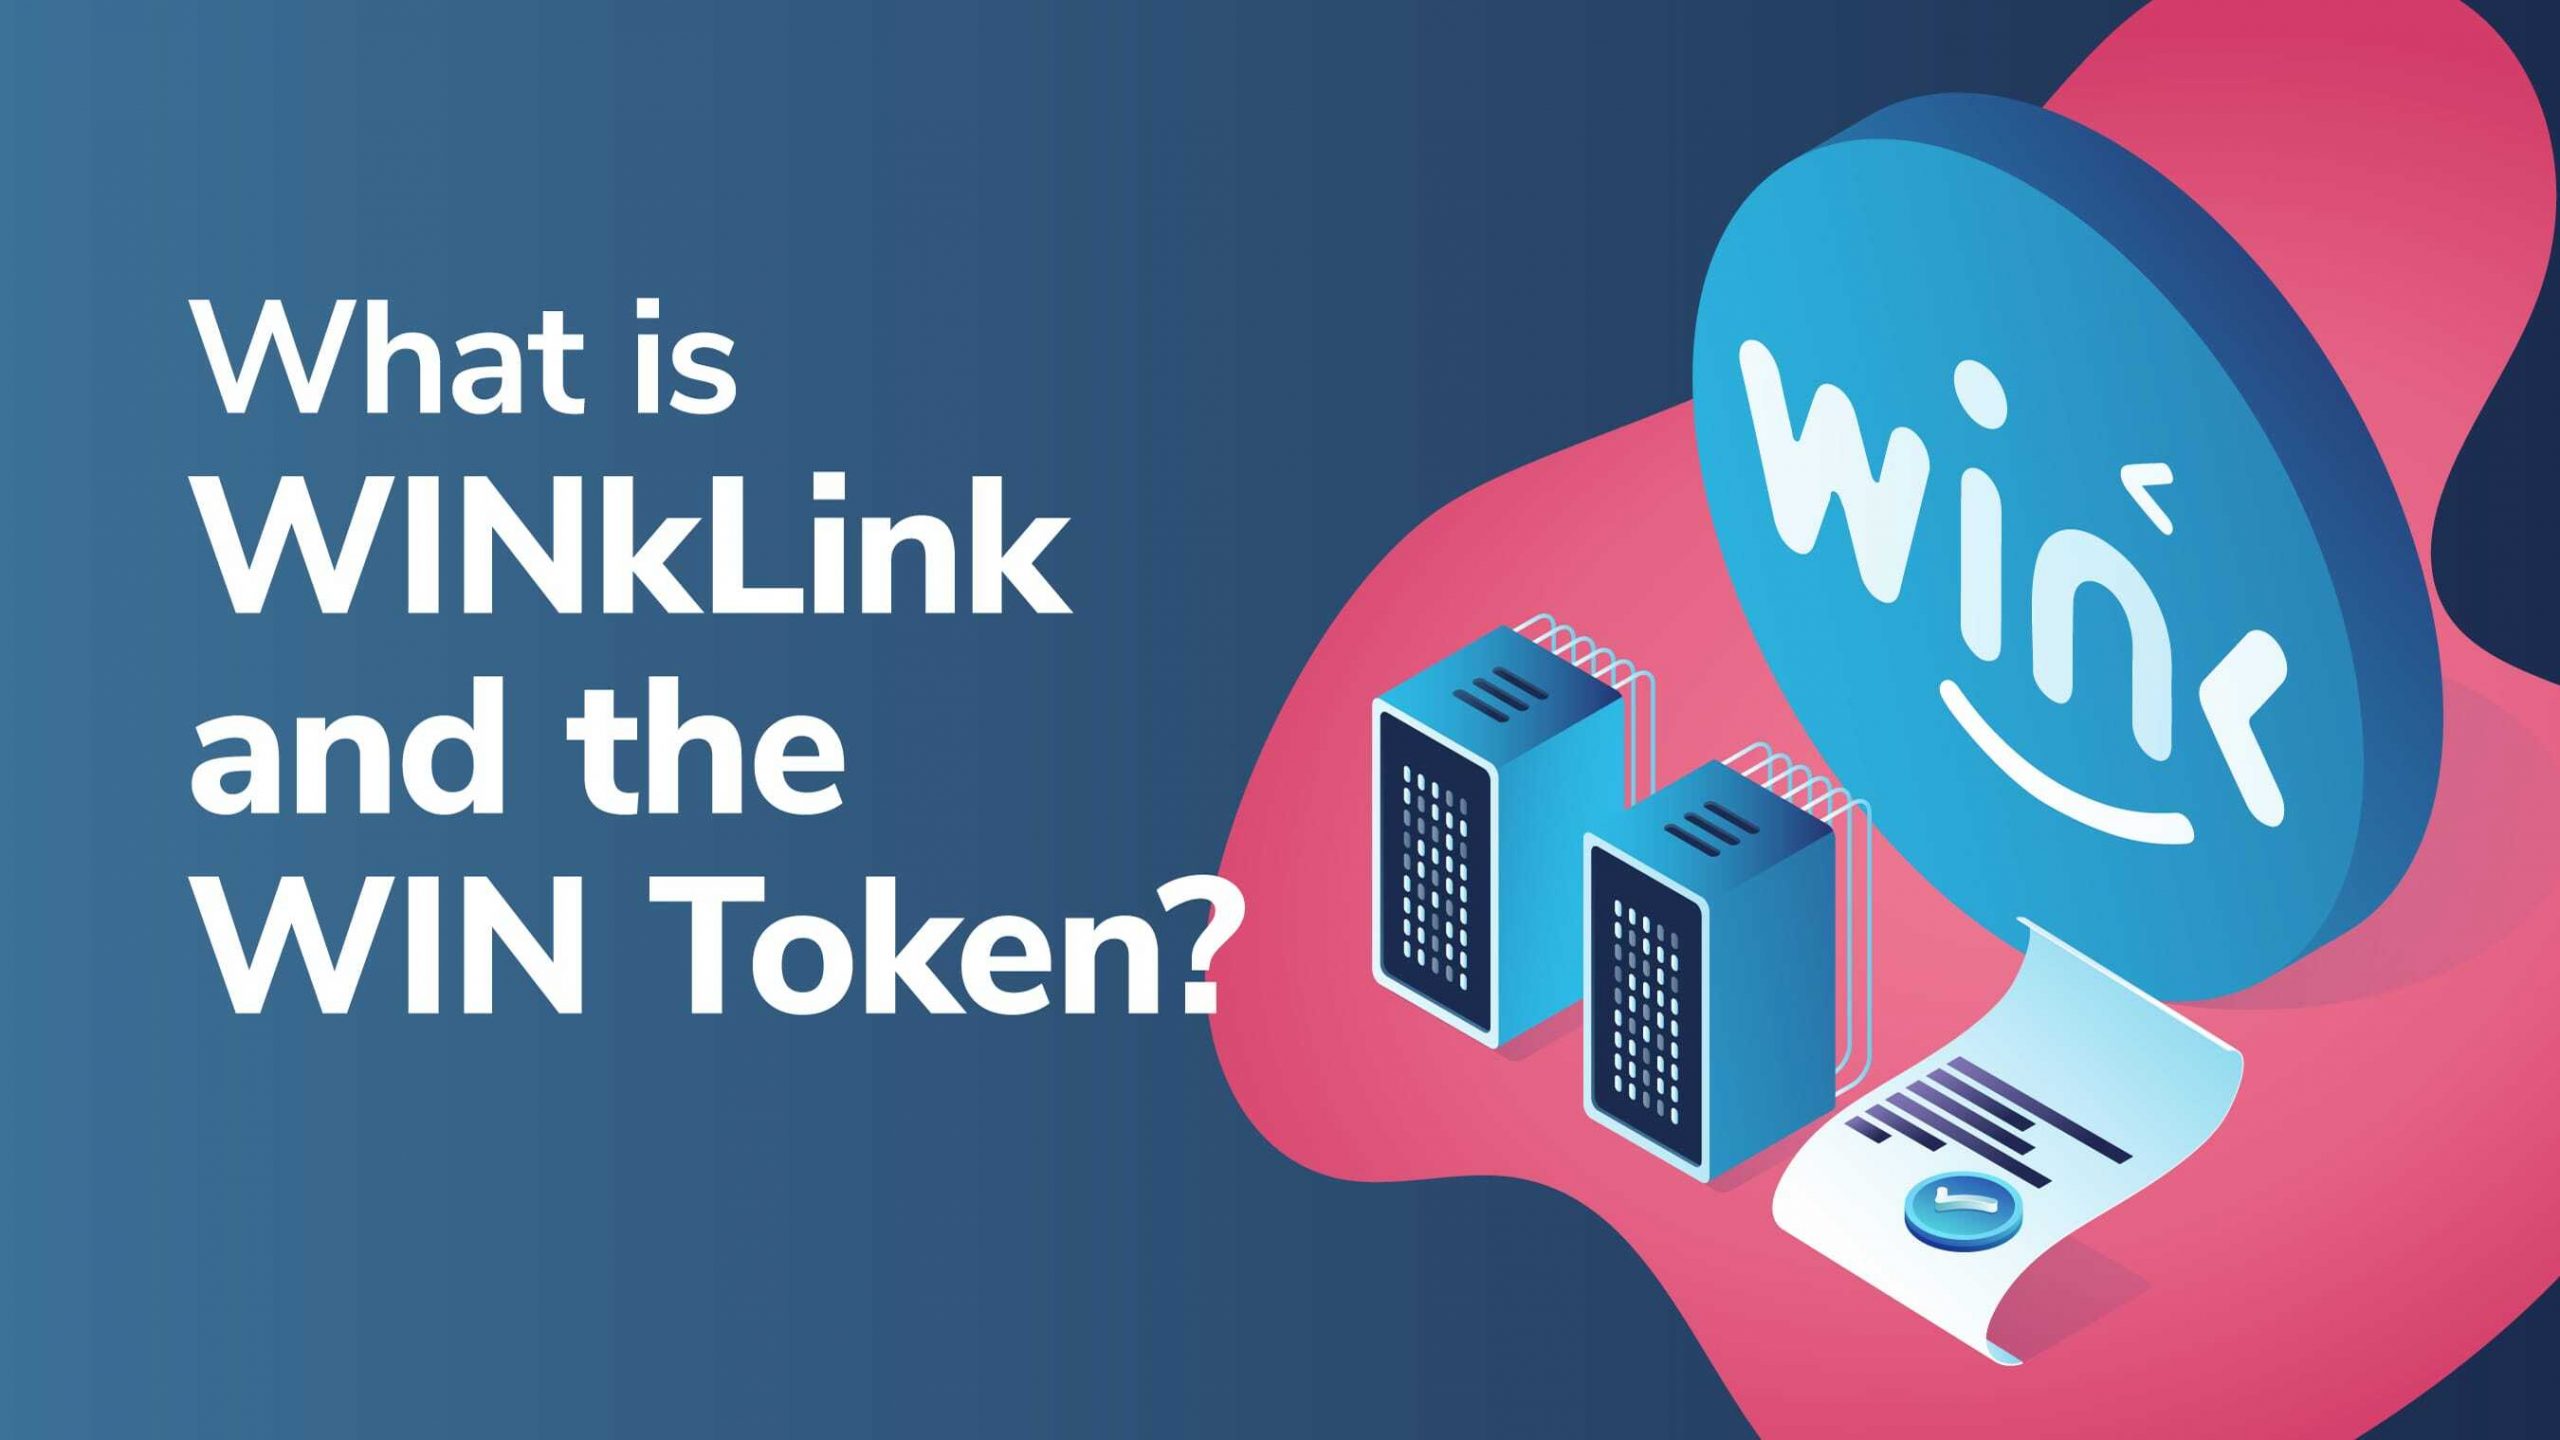 ارز دیجیتال وینک لینک (WINkLink) - WIN چیست؟